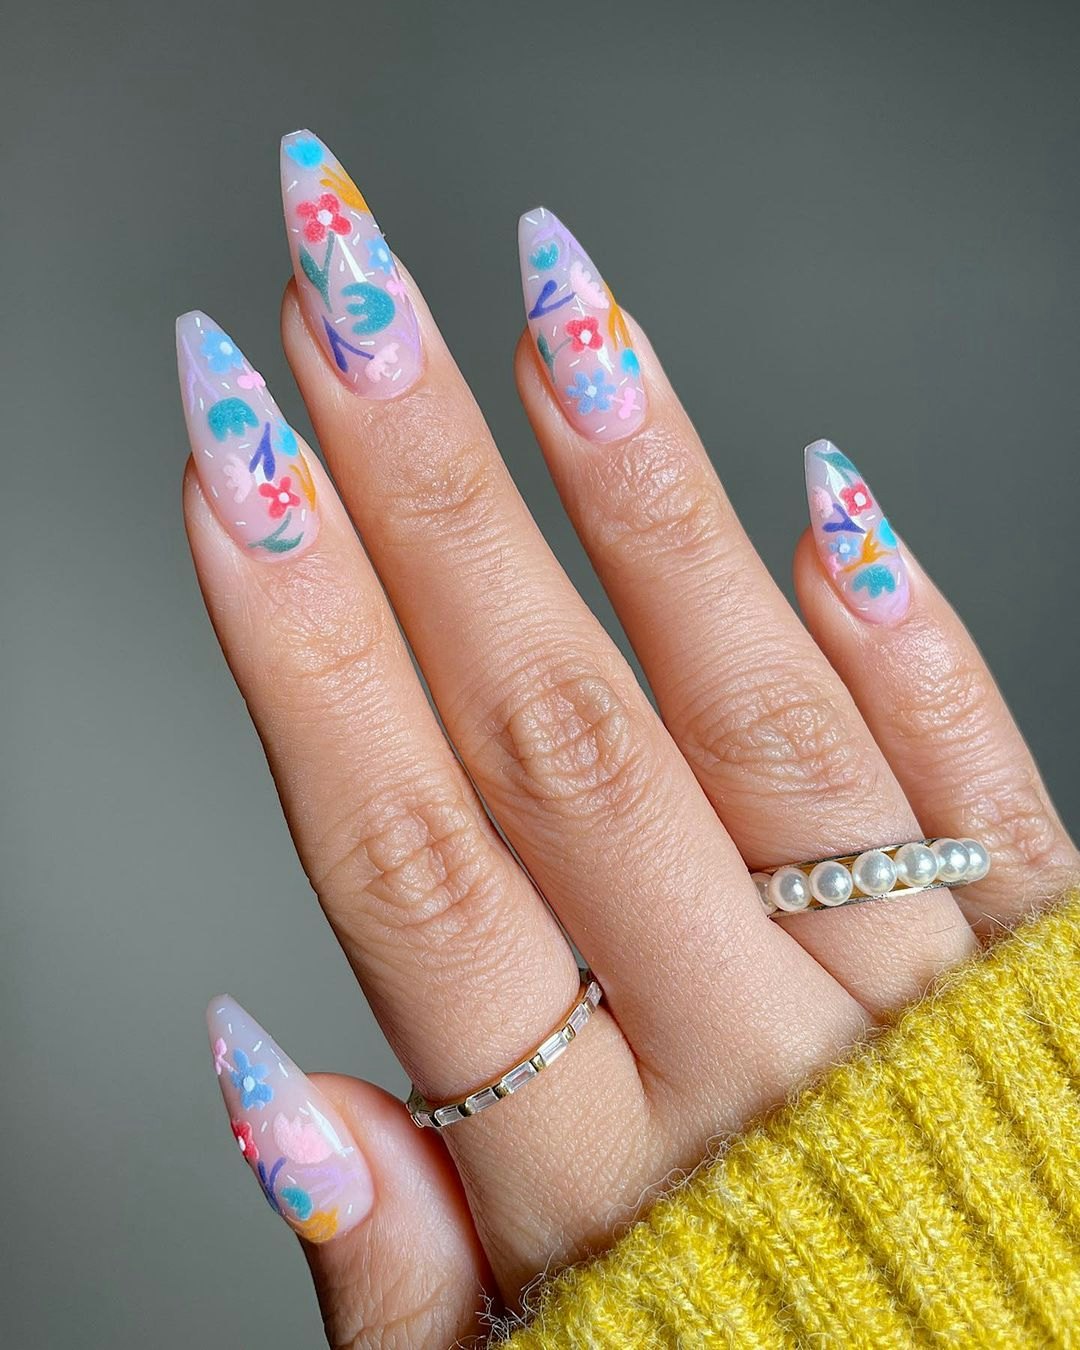 Flower nail designs 🌸 | Gallery posted by Gabbyyjanee | Lemon8